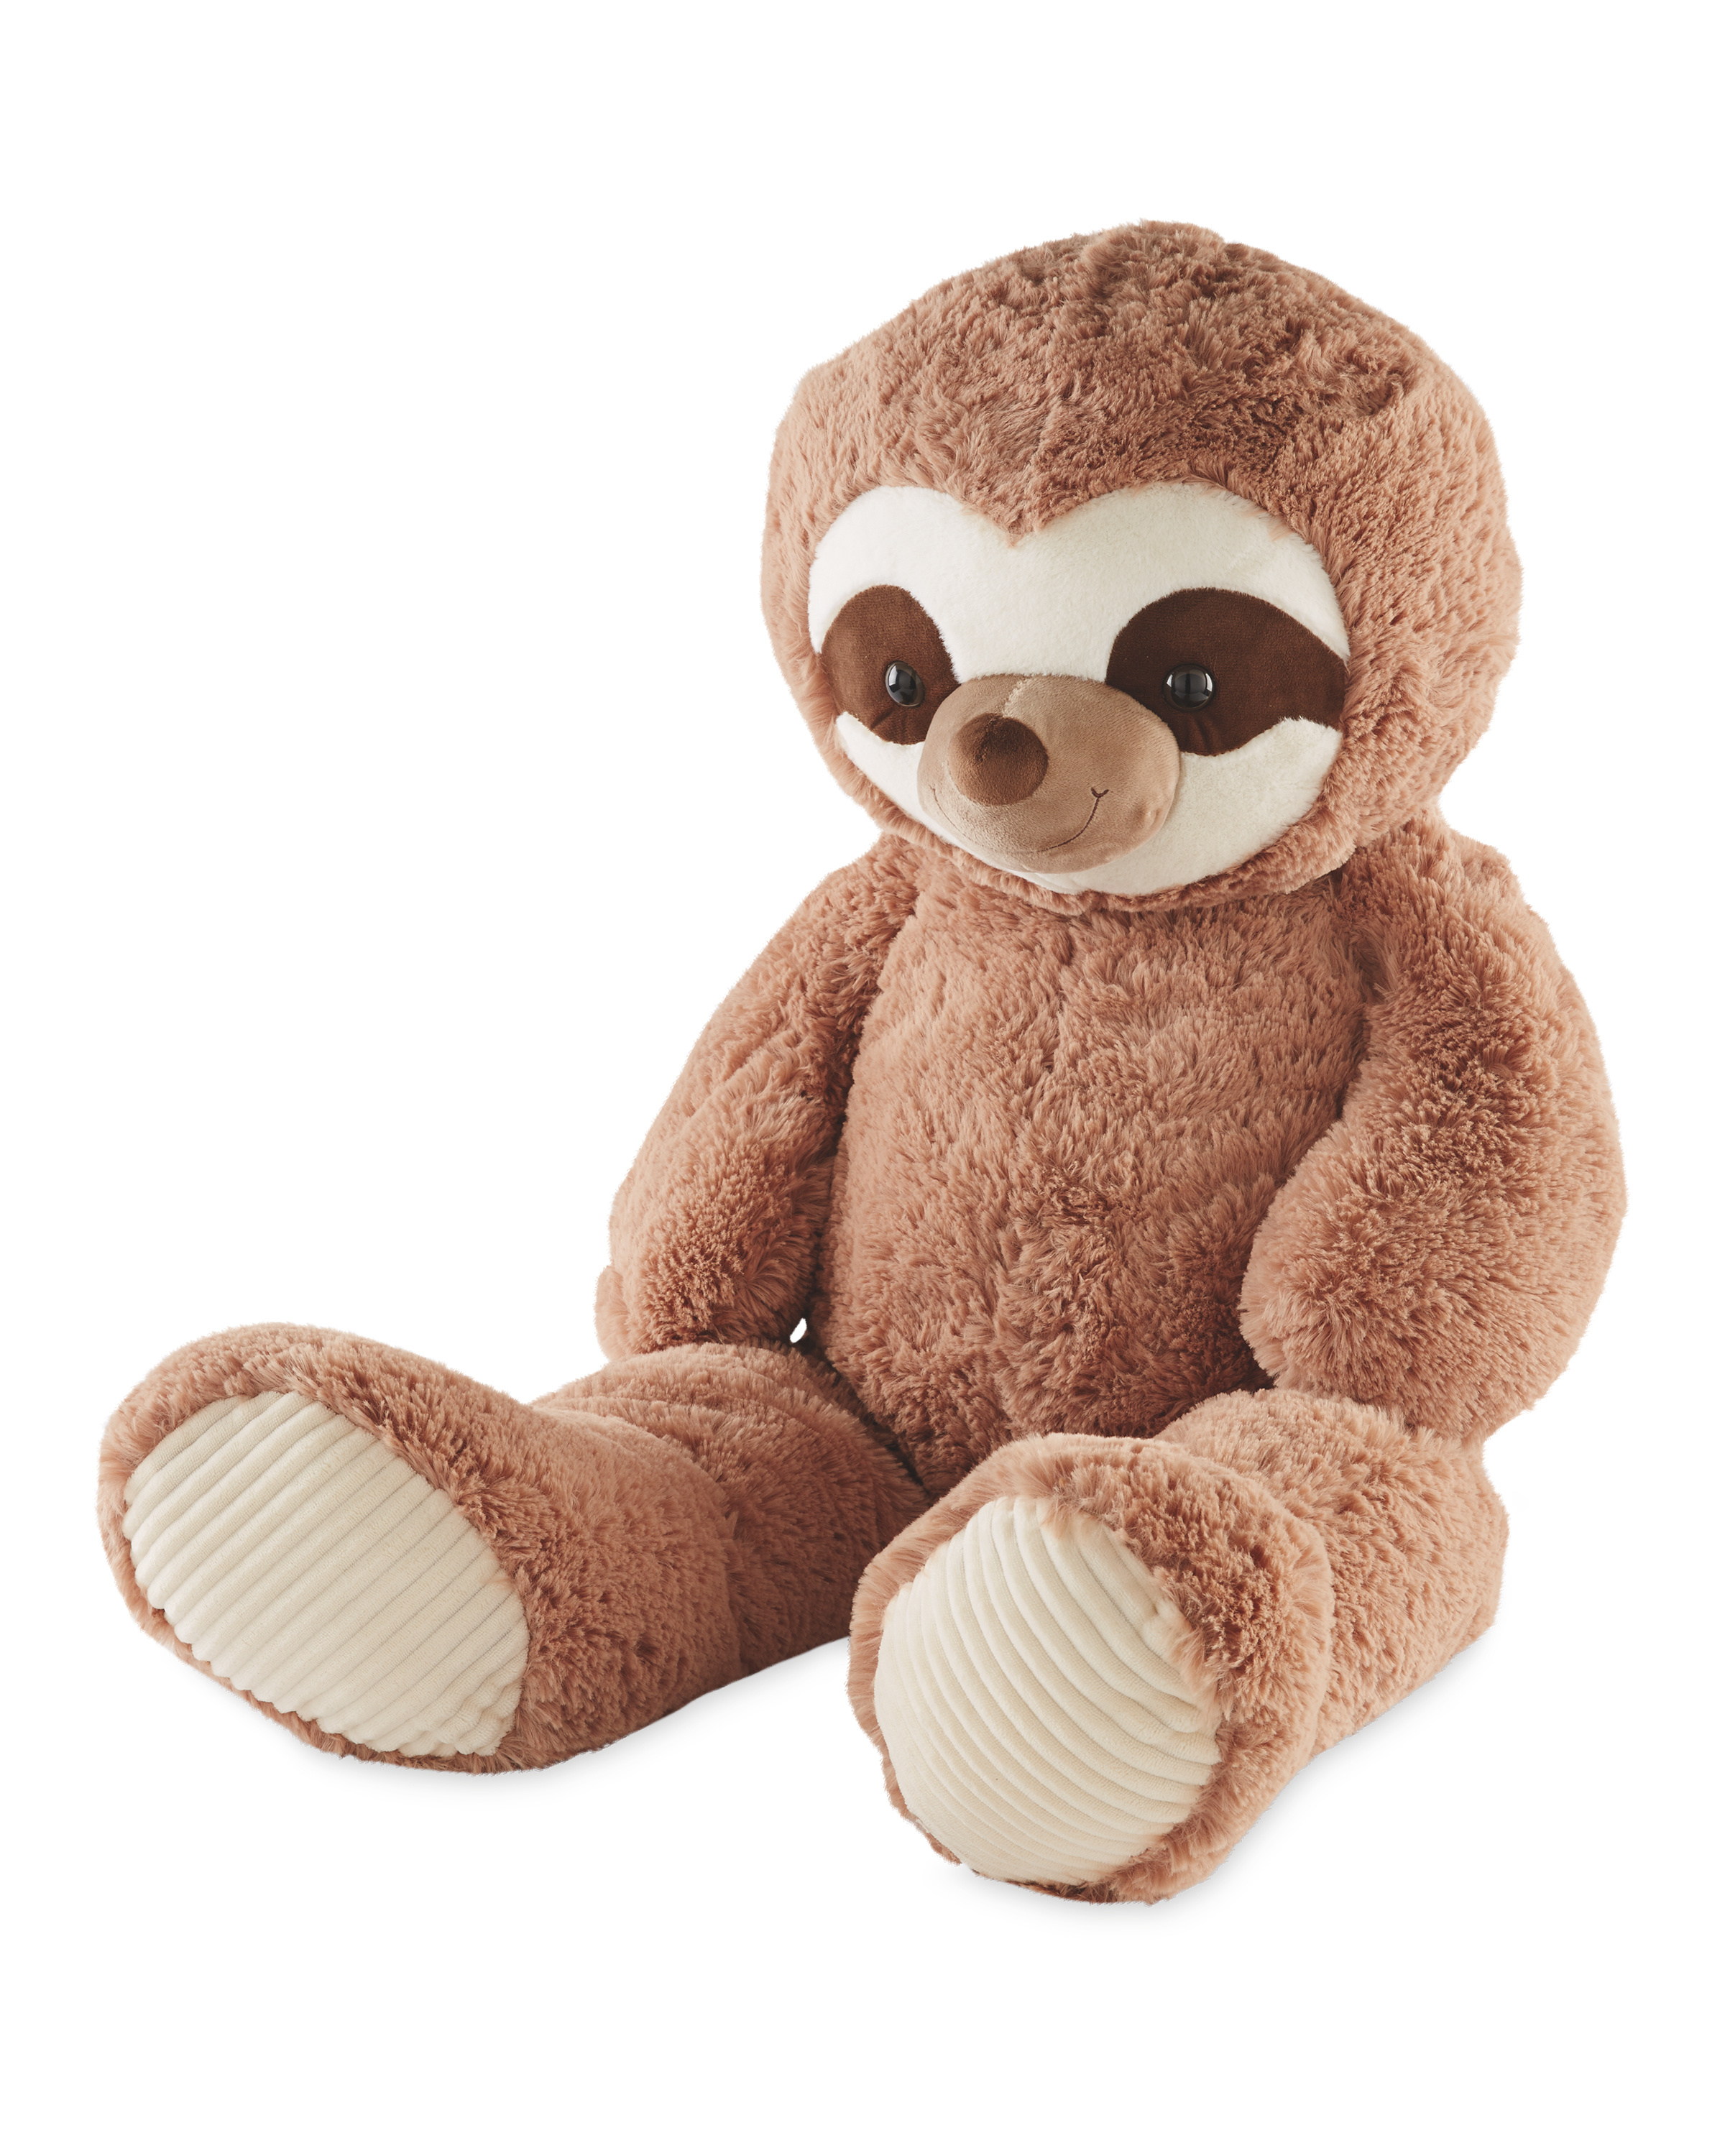 Stuffed Sloth Toy Wow Blog